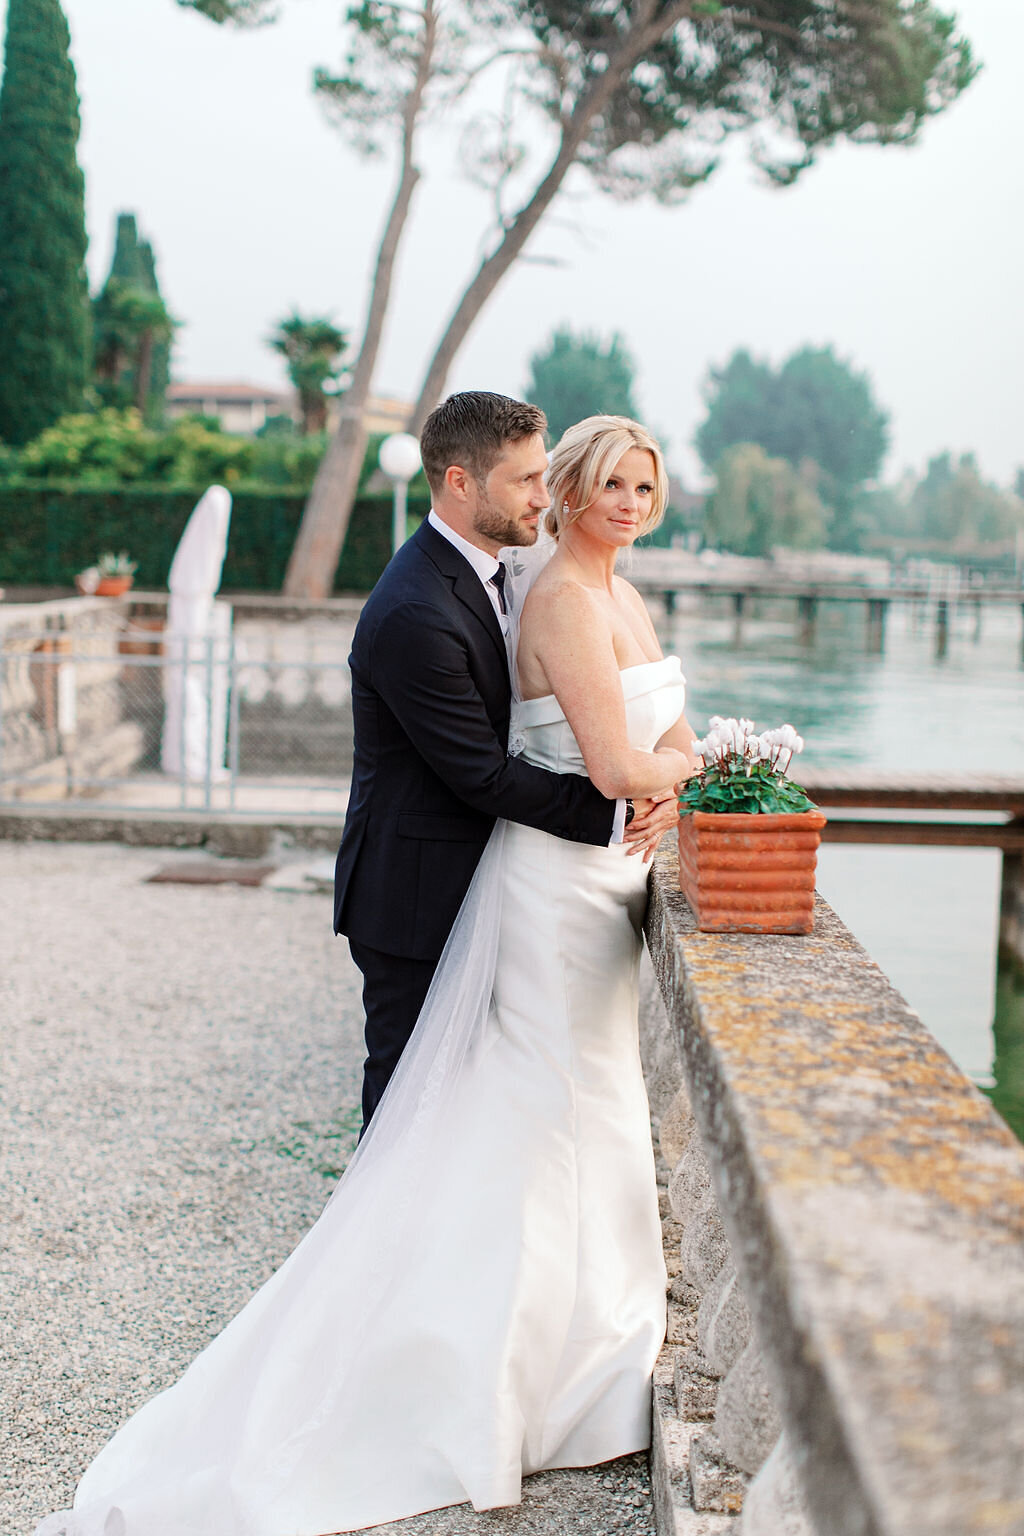 Destination Weddings | Twelfth Night Events - Italy Wedding Planner66